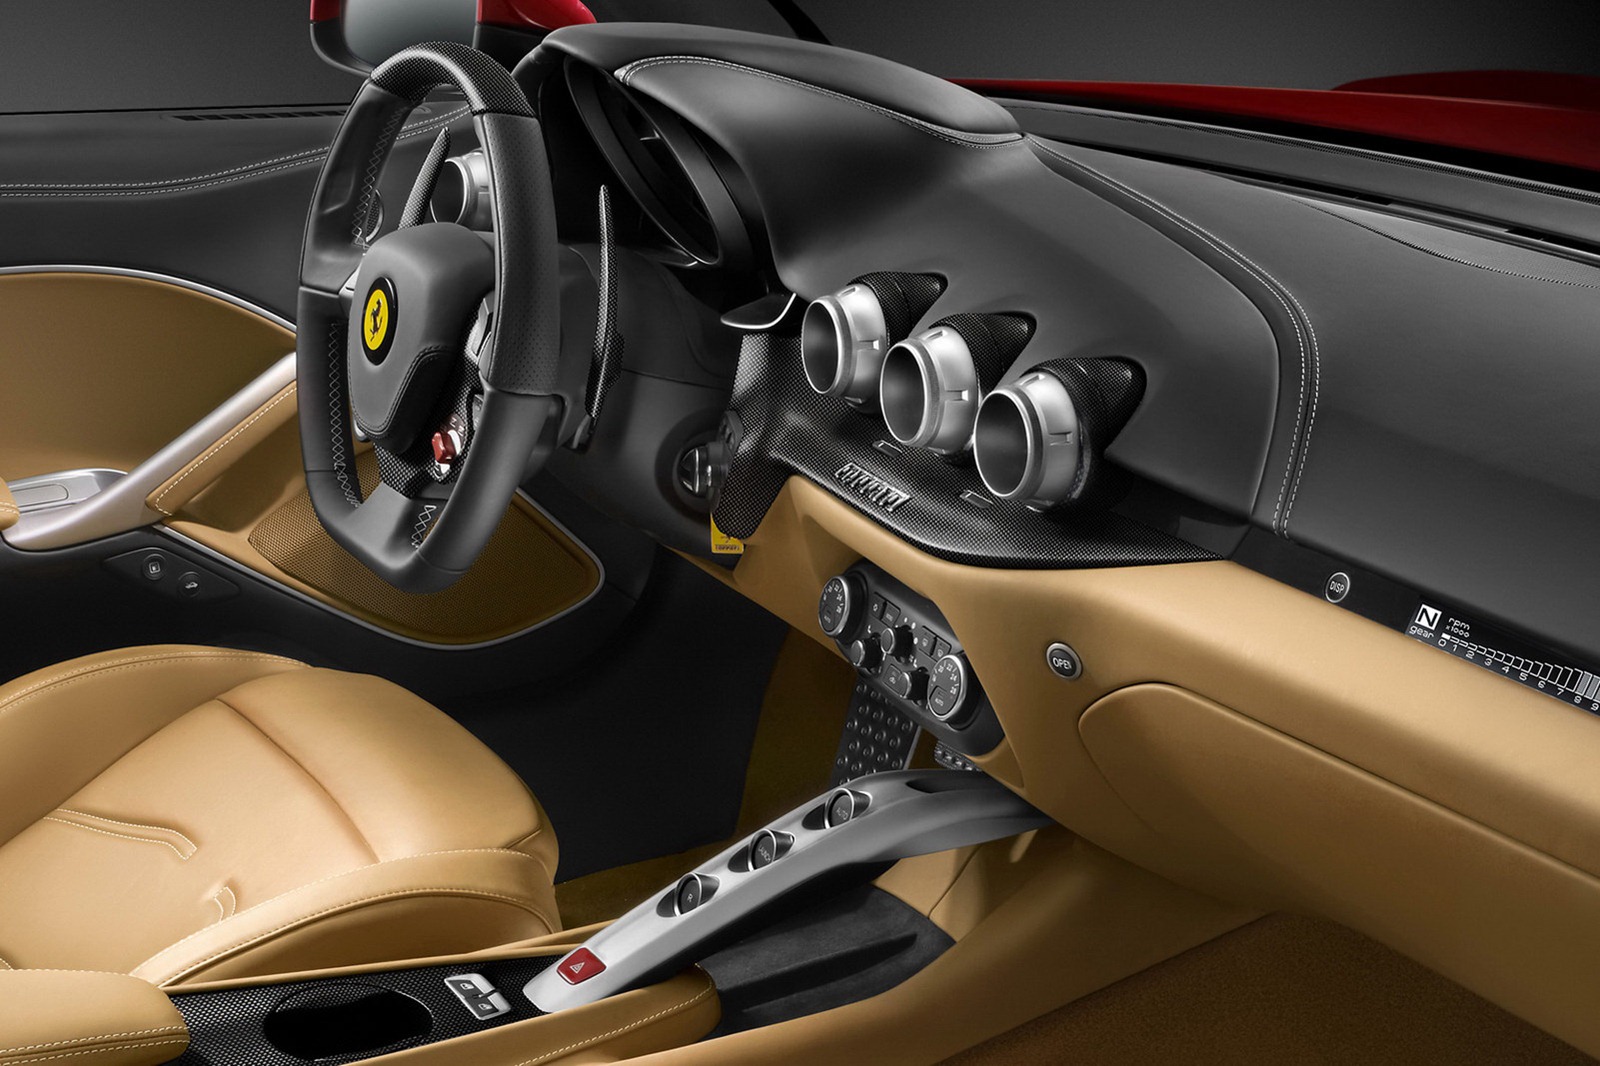 https://blogger.googleusercontent.com/img/b/R29vZ2xl/AVvXsEiAosD3PkQAs29Wcjwk82nGpsN4ECes9spfrvZNGMbH7gU0uO4TtKyd4iLMYLIok1J7X0jLM6yfhGEcRle8wW9jSkLXgDVms6yKdf2i9l8KmOTXY7kXYiP6MxmZLH4ECnyDnDVflDbViIFt/s1600/Ferrari-F12-Berlinetta-cabin.jpg